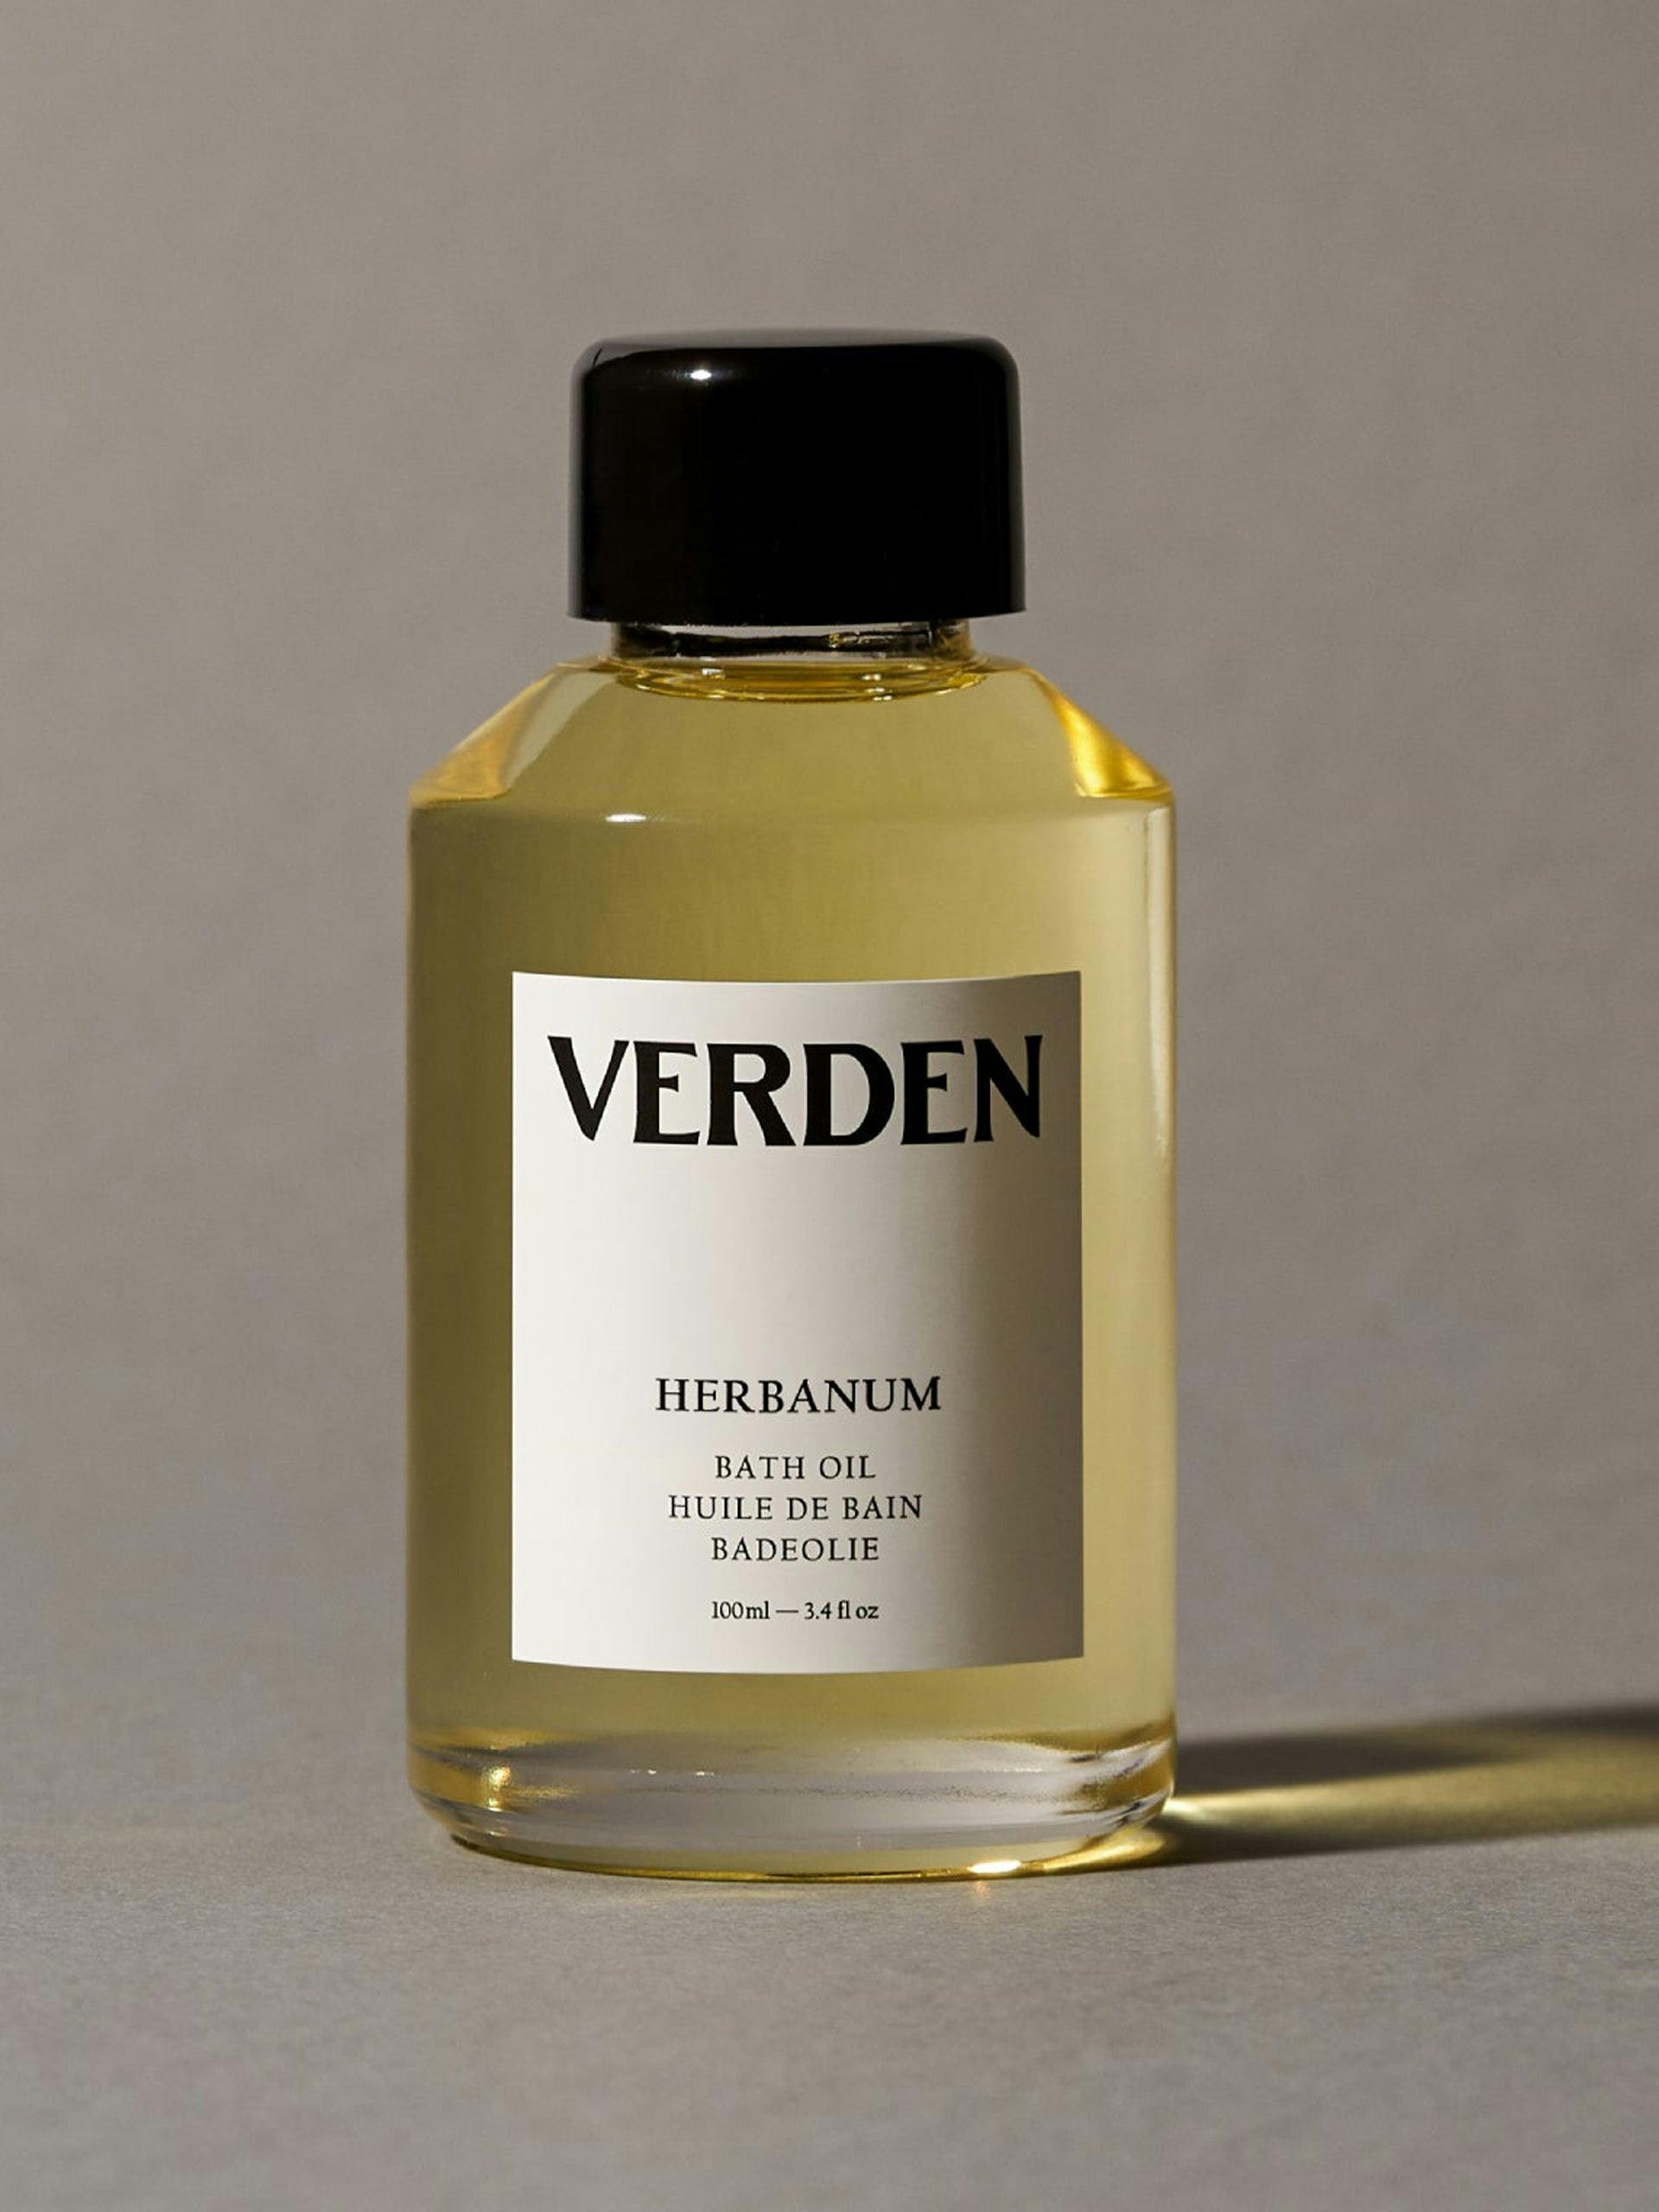 Herbanum bath oil